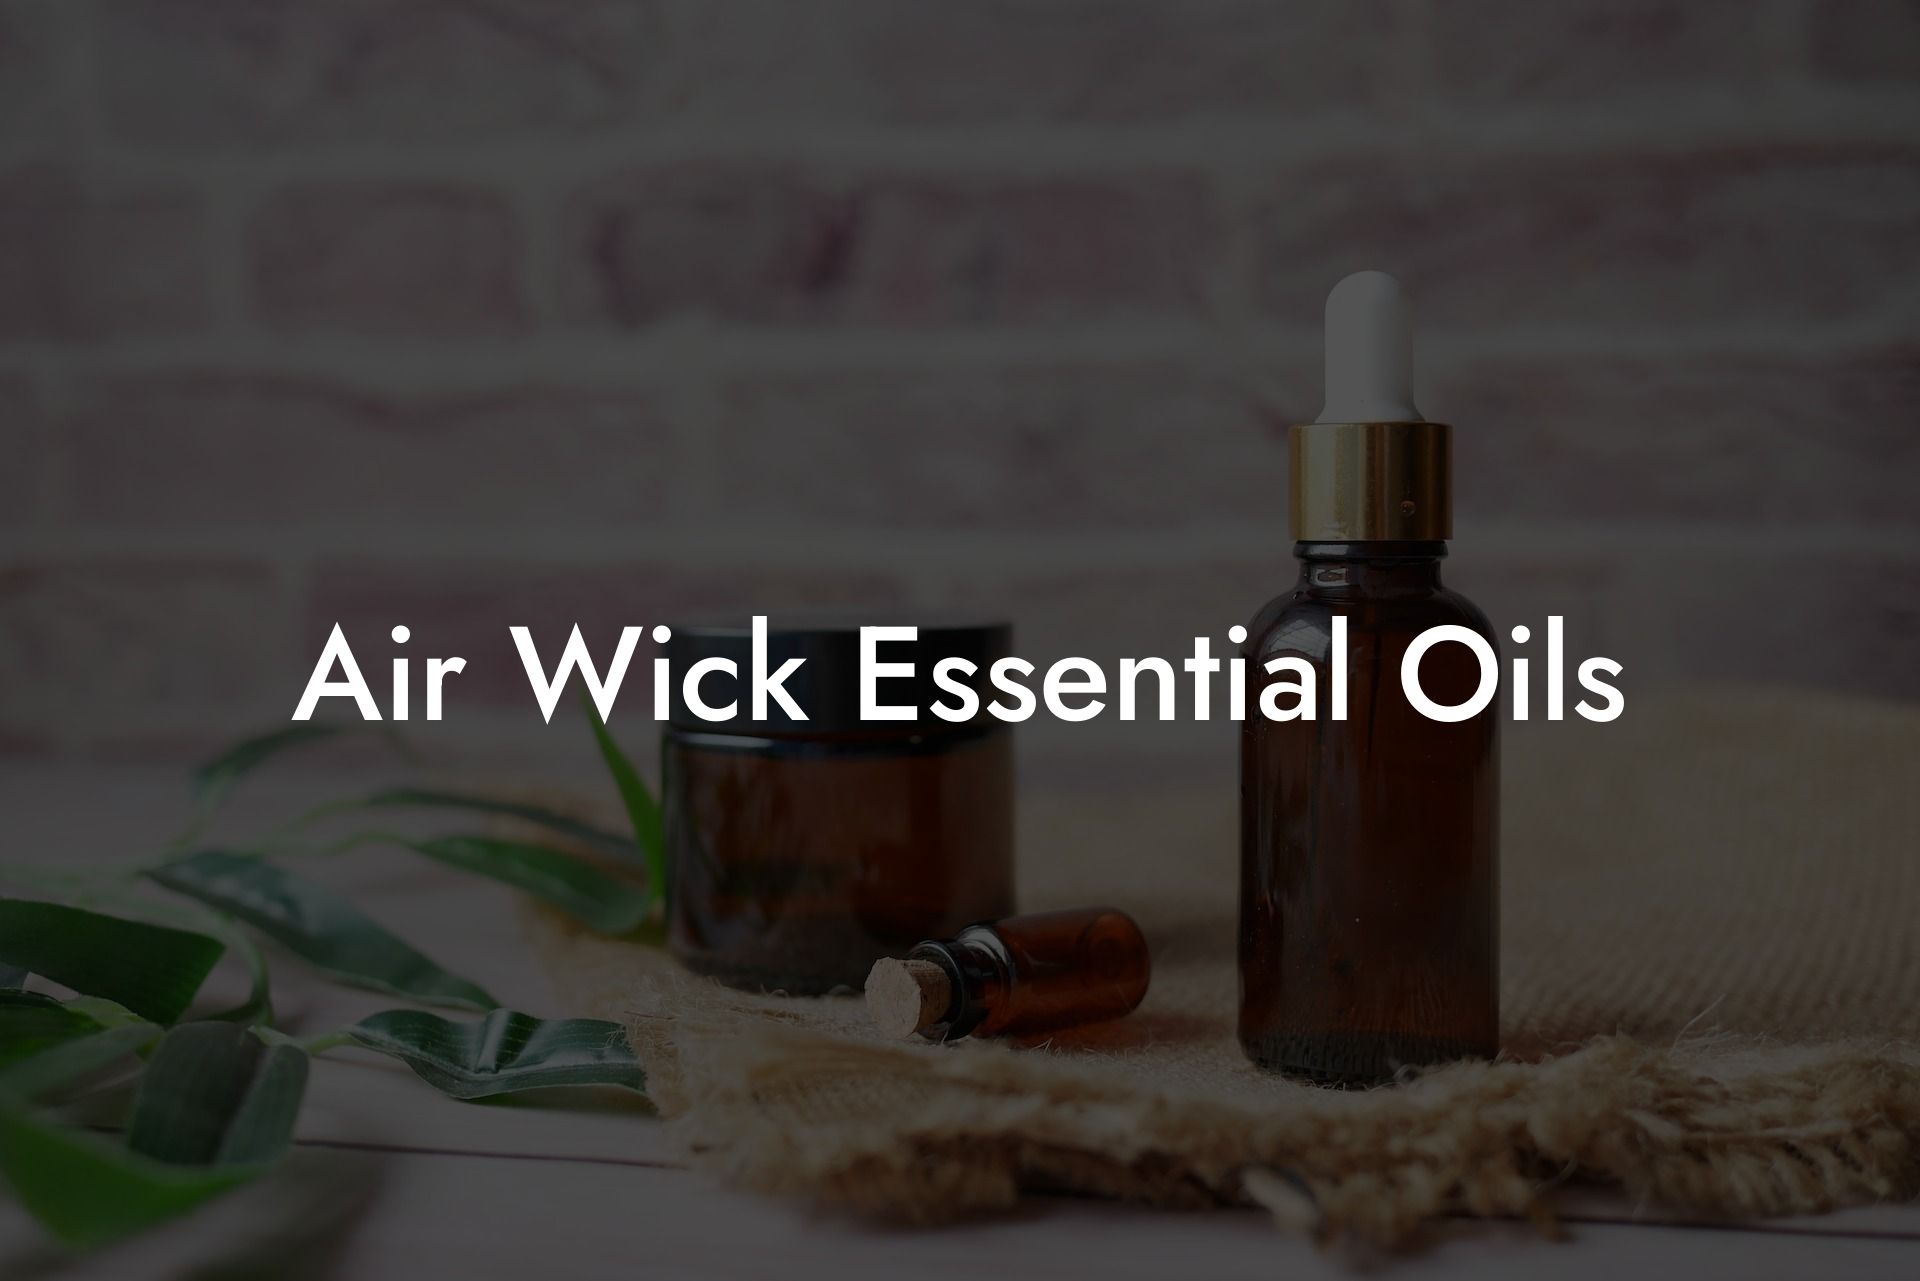 Air Wick Essential Oils